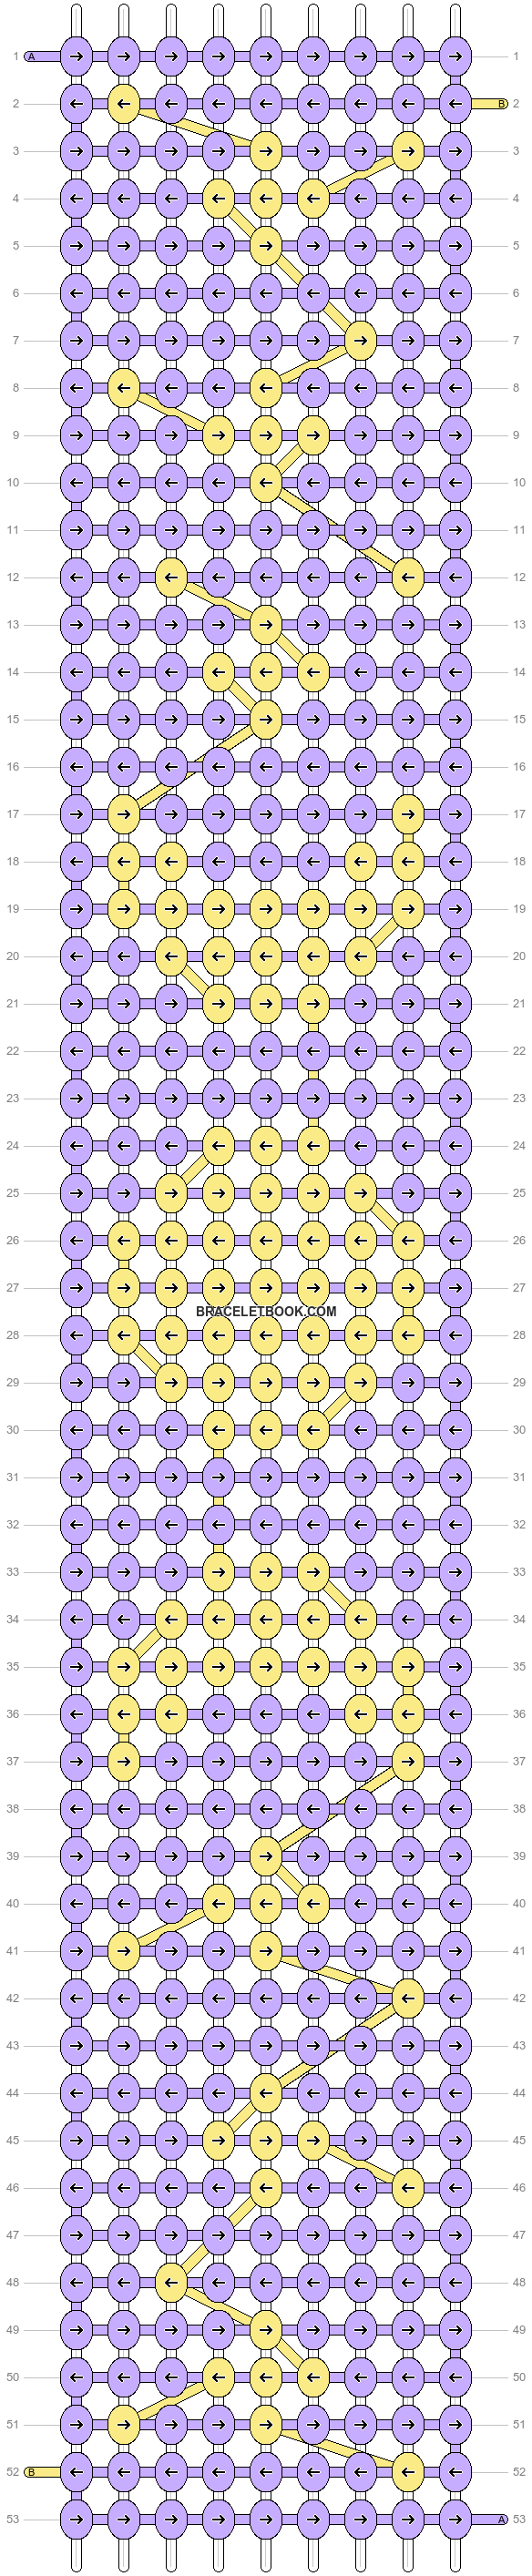 Alpha pattern #40067 variation #69135 pattern